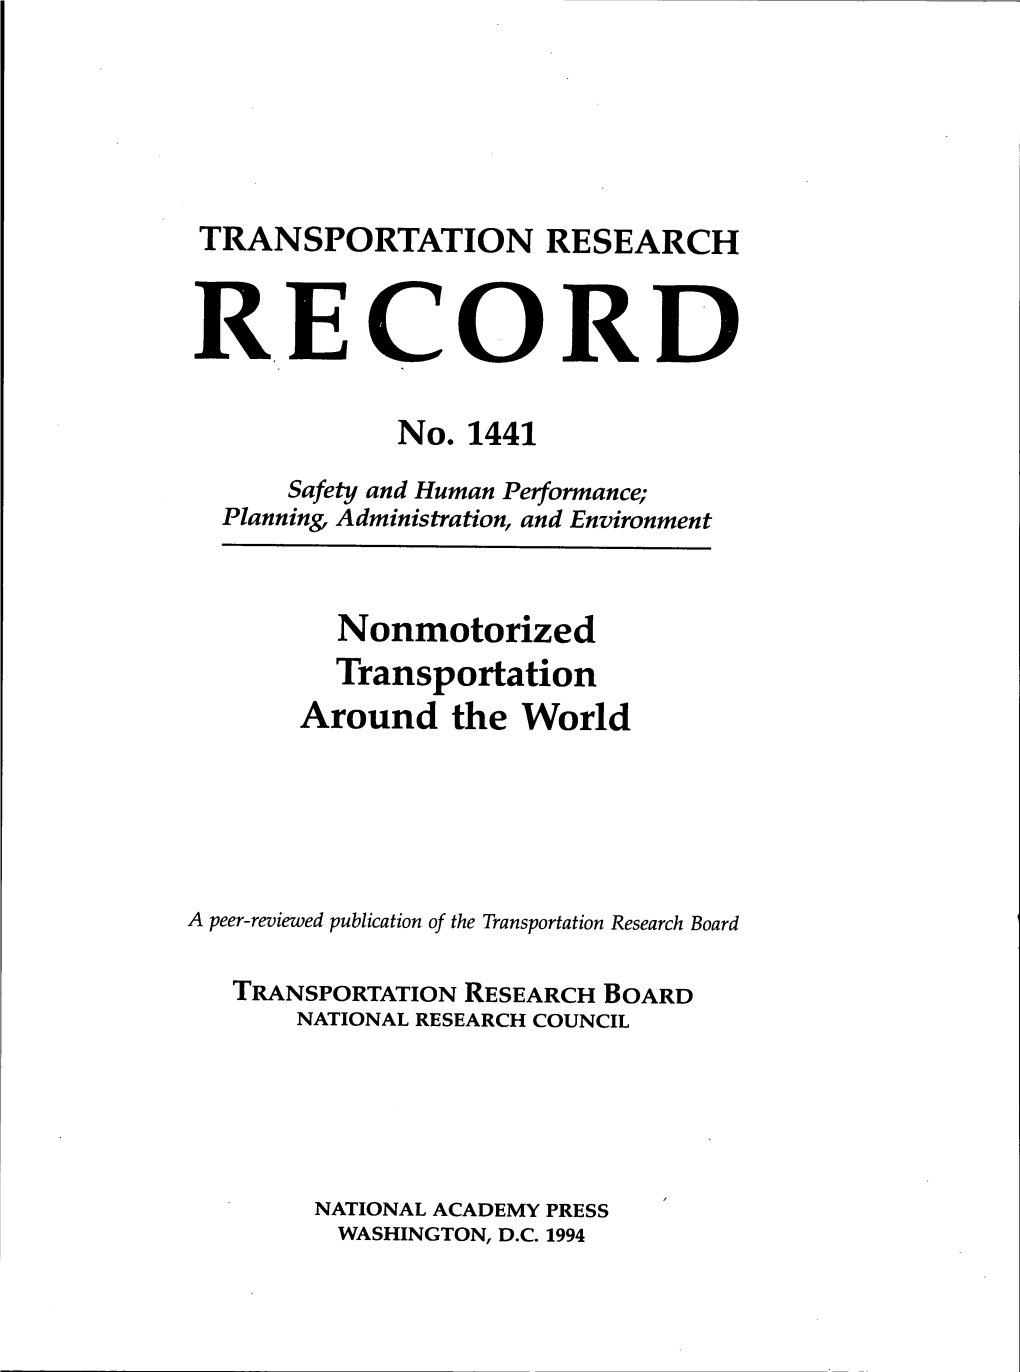 Transportation Research Record No. 1441, Nonmotorized Transportation